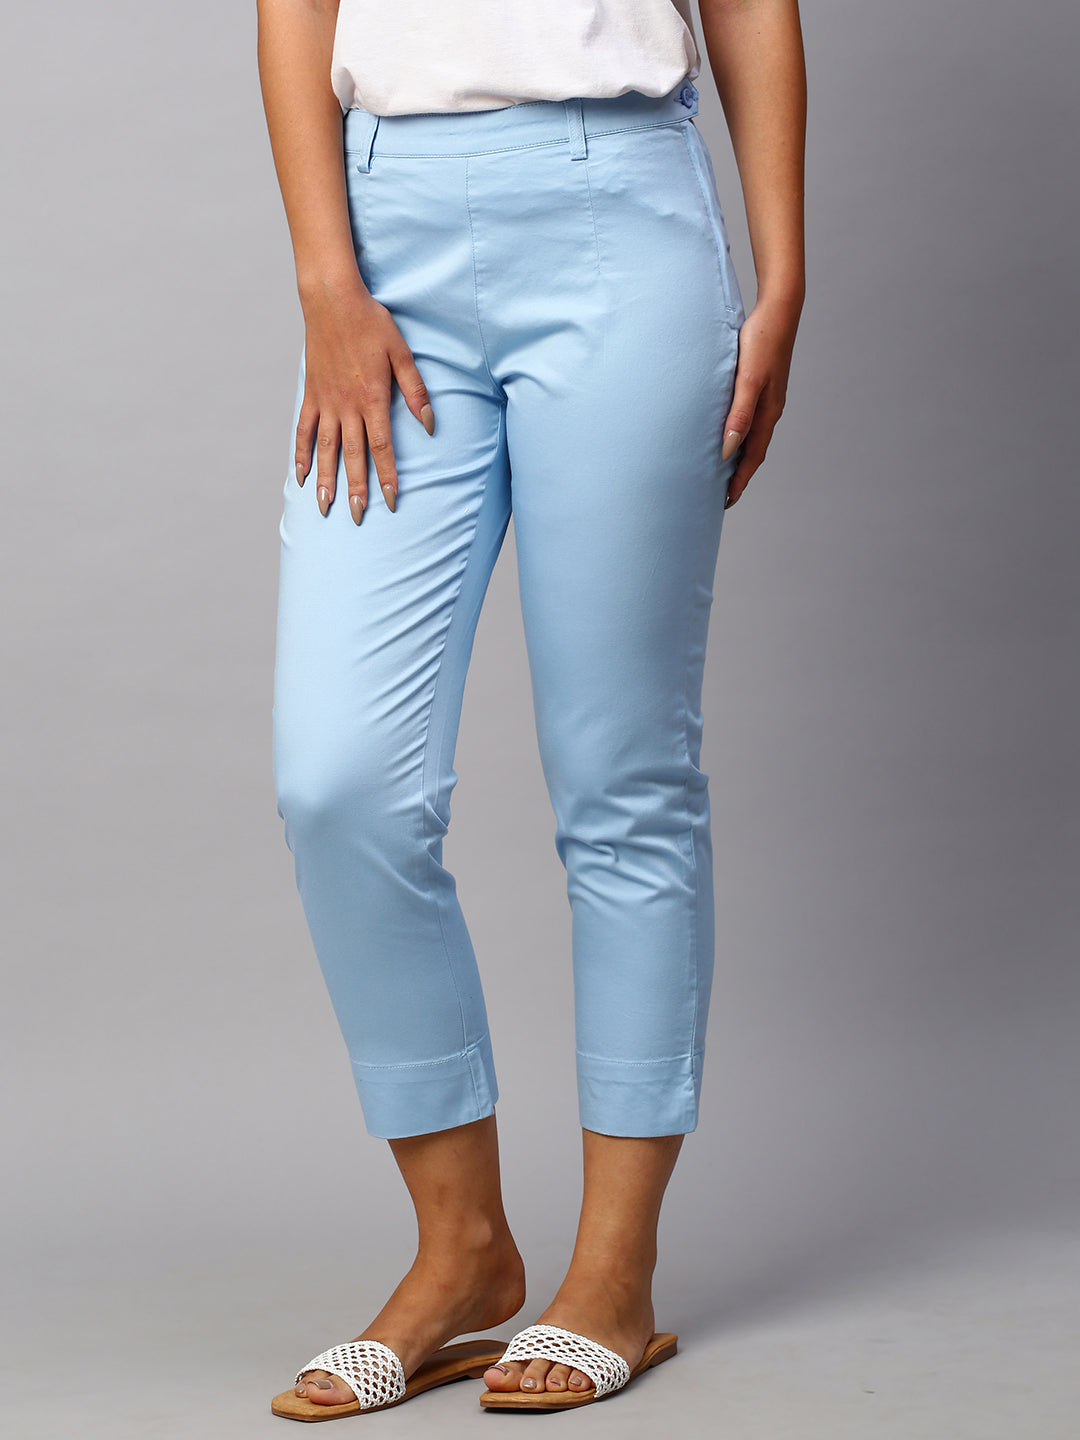 Women's Blue Cotton Lycra Regular Fit Pant